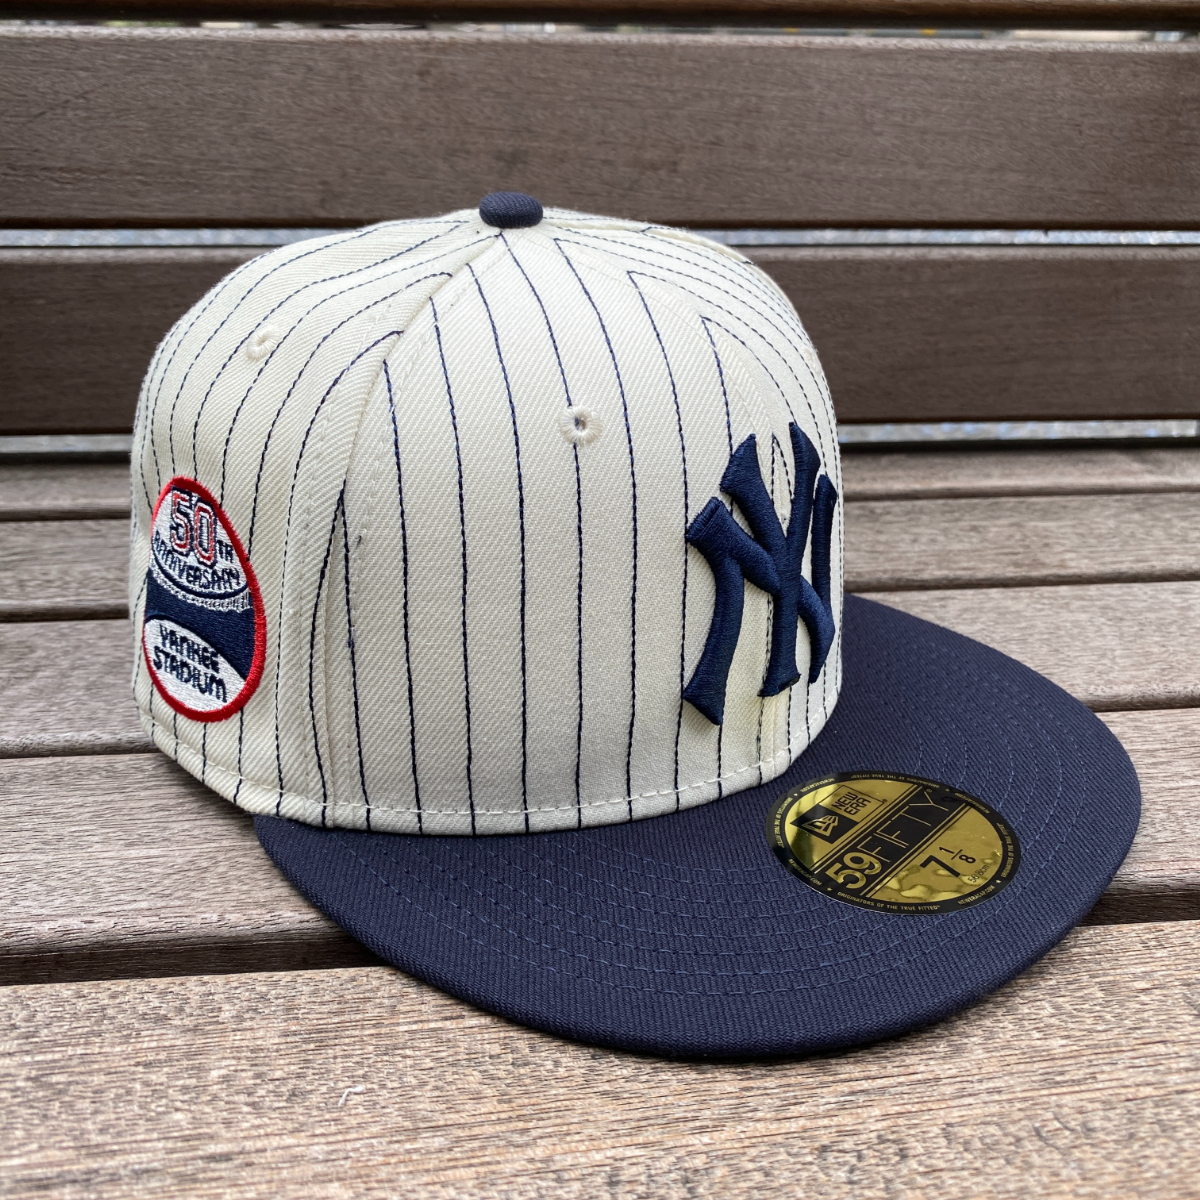 USA限定【7】Newera ニューエラ 59FIFTY MLB ニューヨーク ヤンキース NY Yankees 50周年記念 ピンストライプ 2トーン Cooperstown